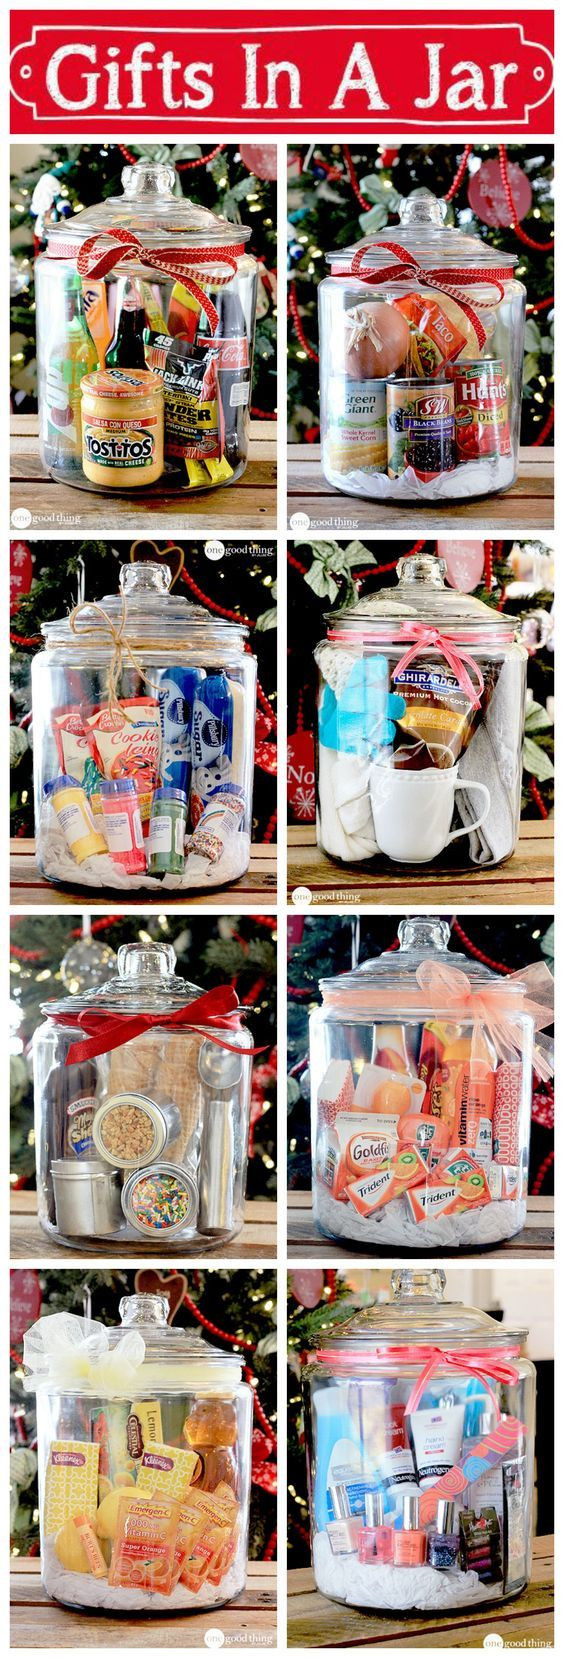 Office Christmas Party Gift Ideas
 Best 25 fice christmas ts ideas on Pinterest